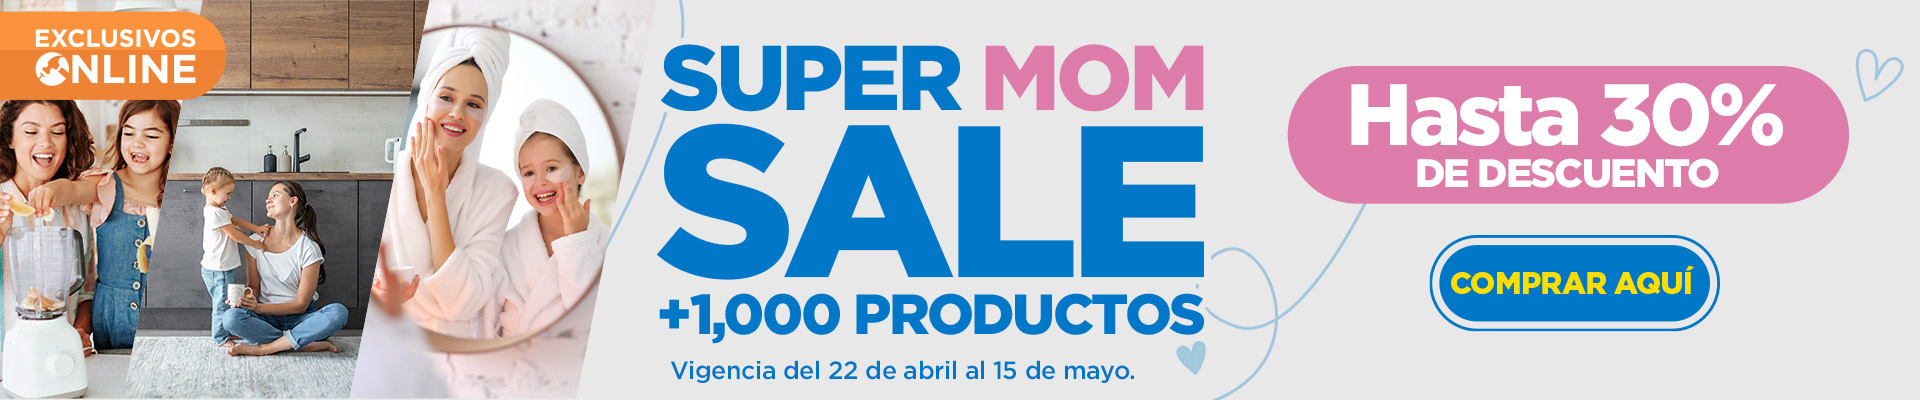 01 Super Mom Sale